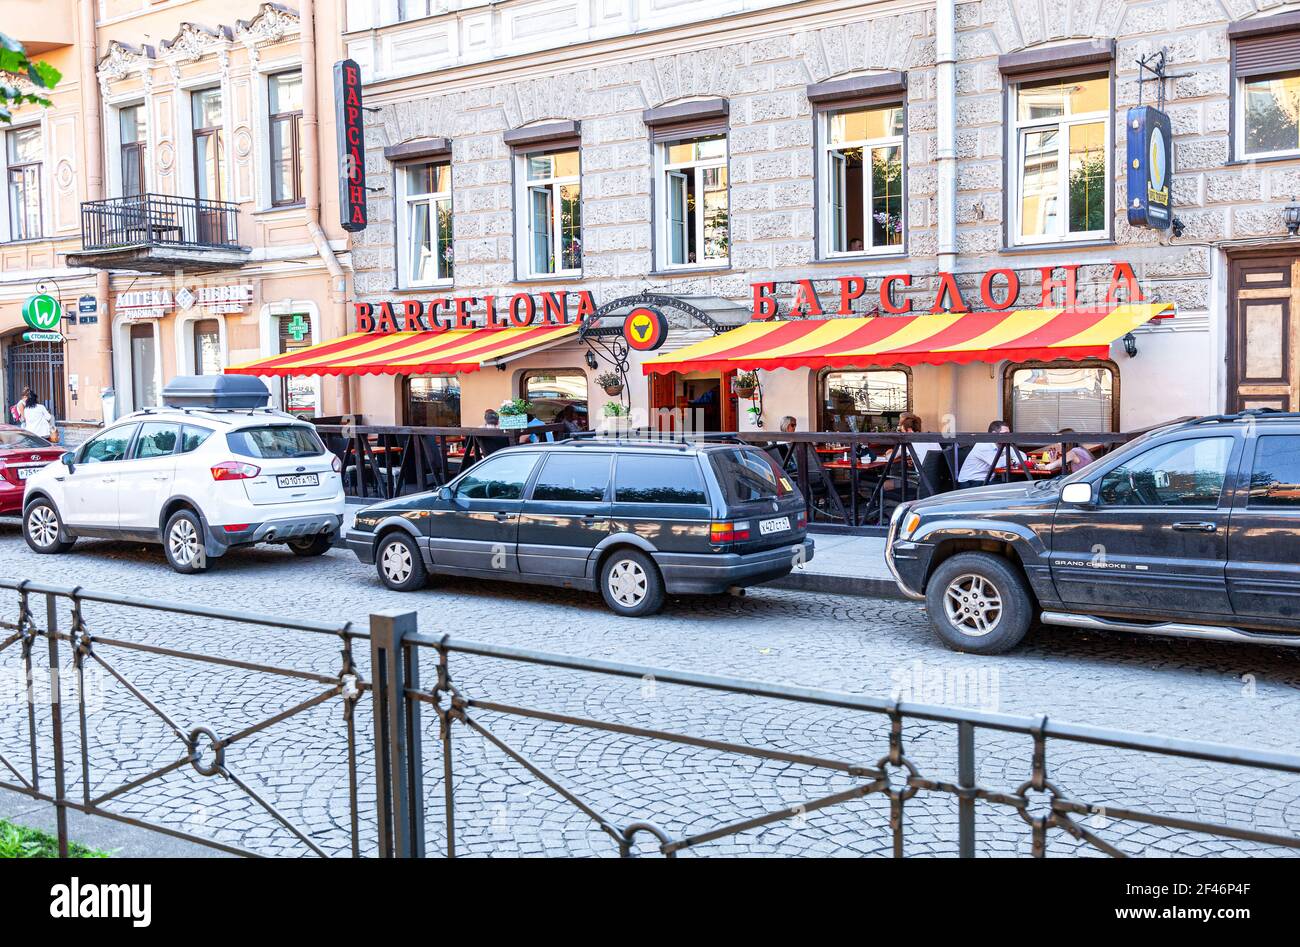 Saint Petersburg, Russia - July 27, 2016: Famous street cafe Barslona Stock Photo